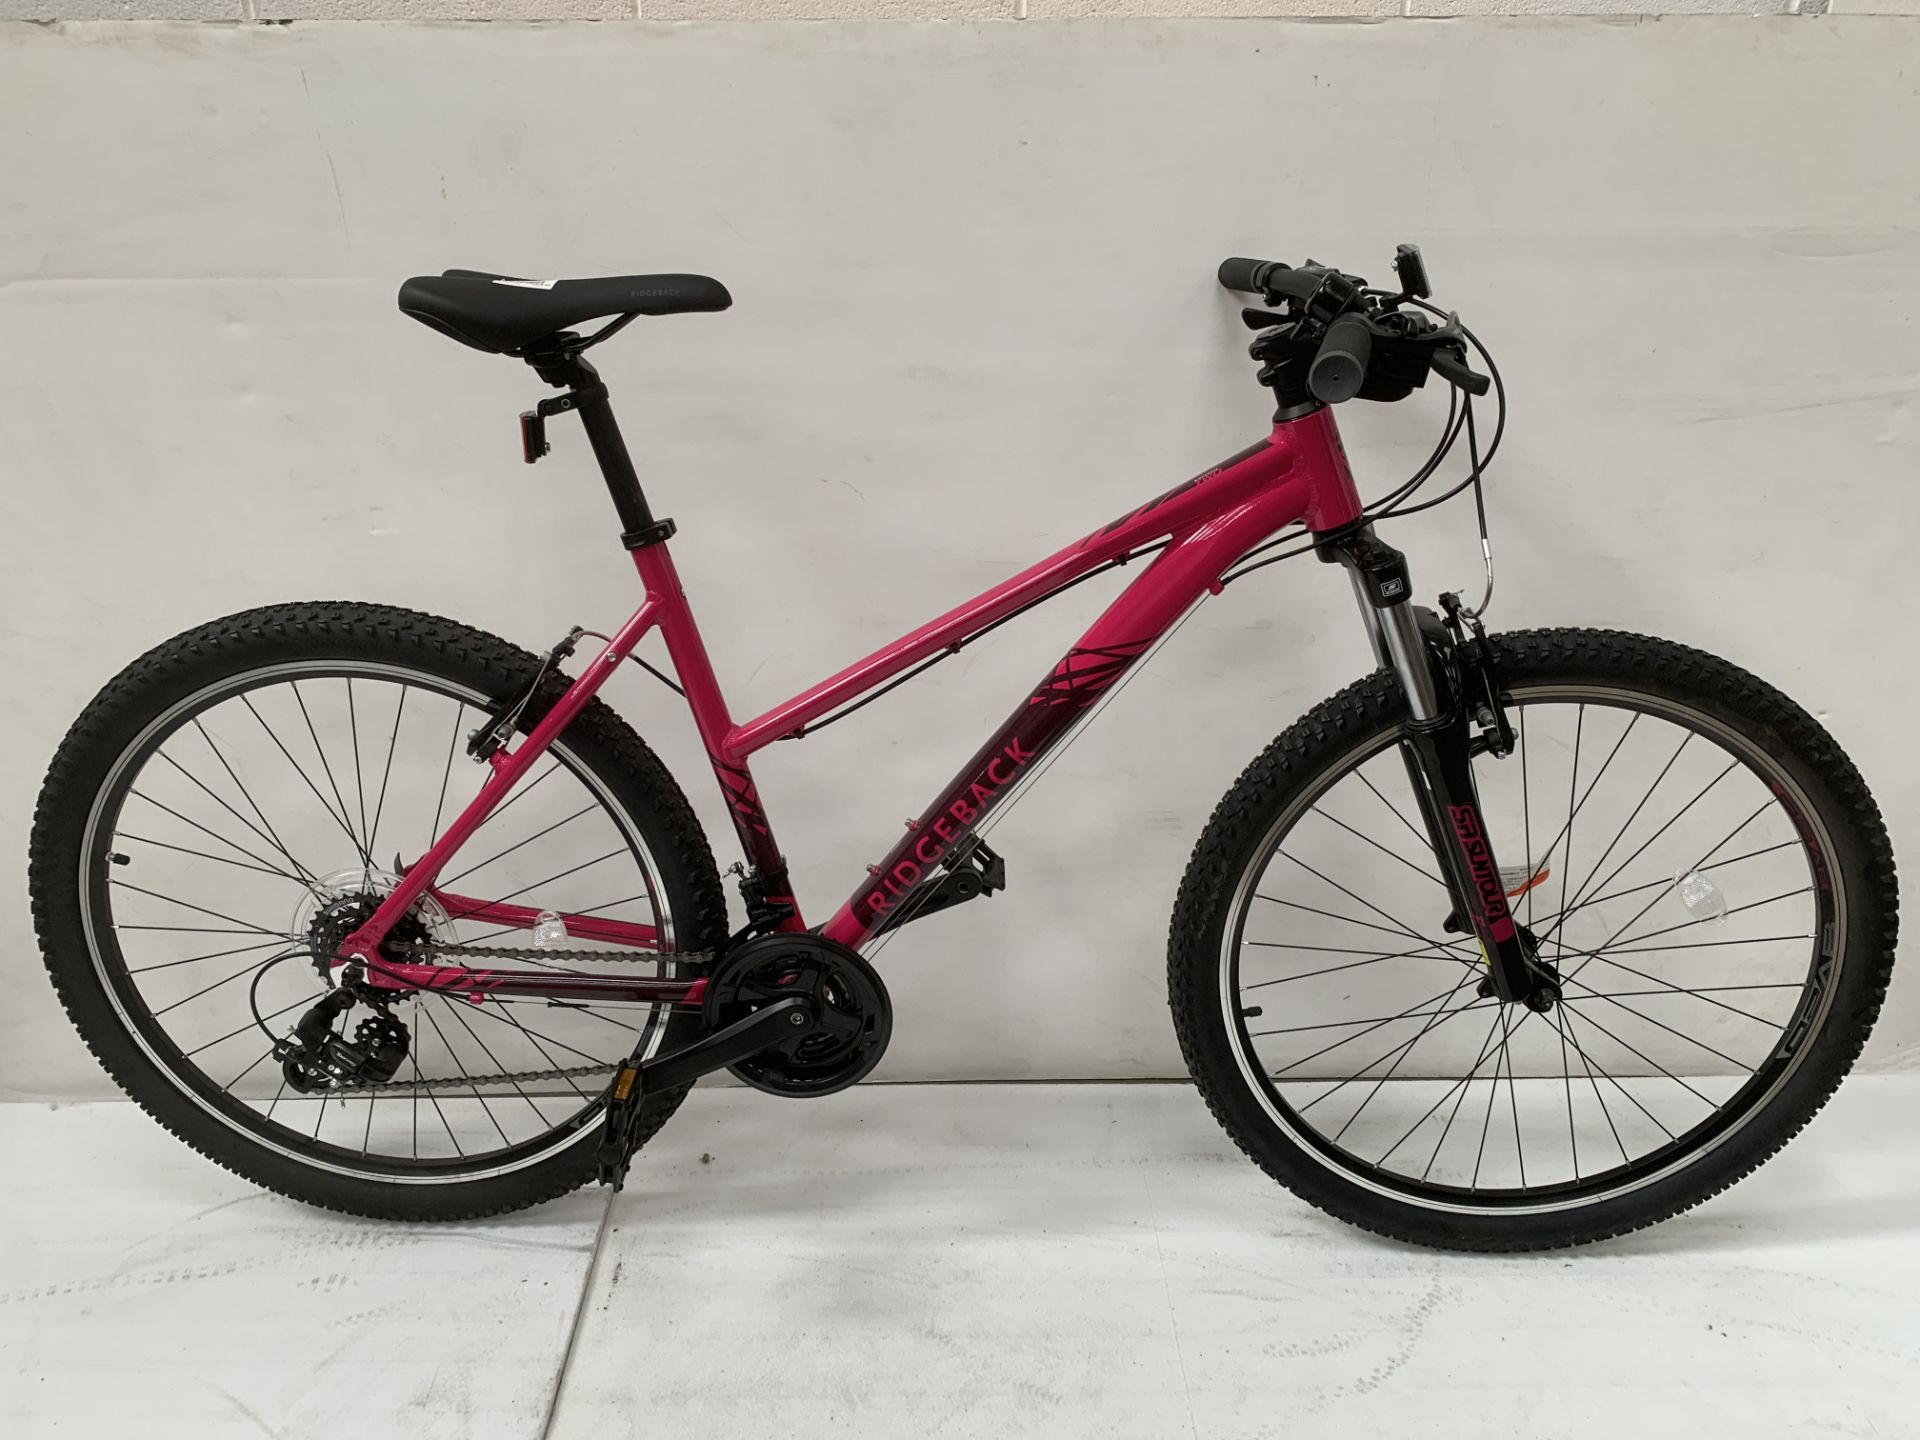 Ridgeback Terrain 2 'Pink' 19" Bicycle. RRP £429